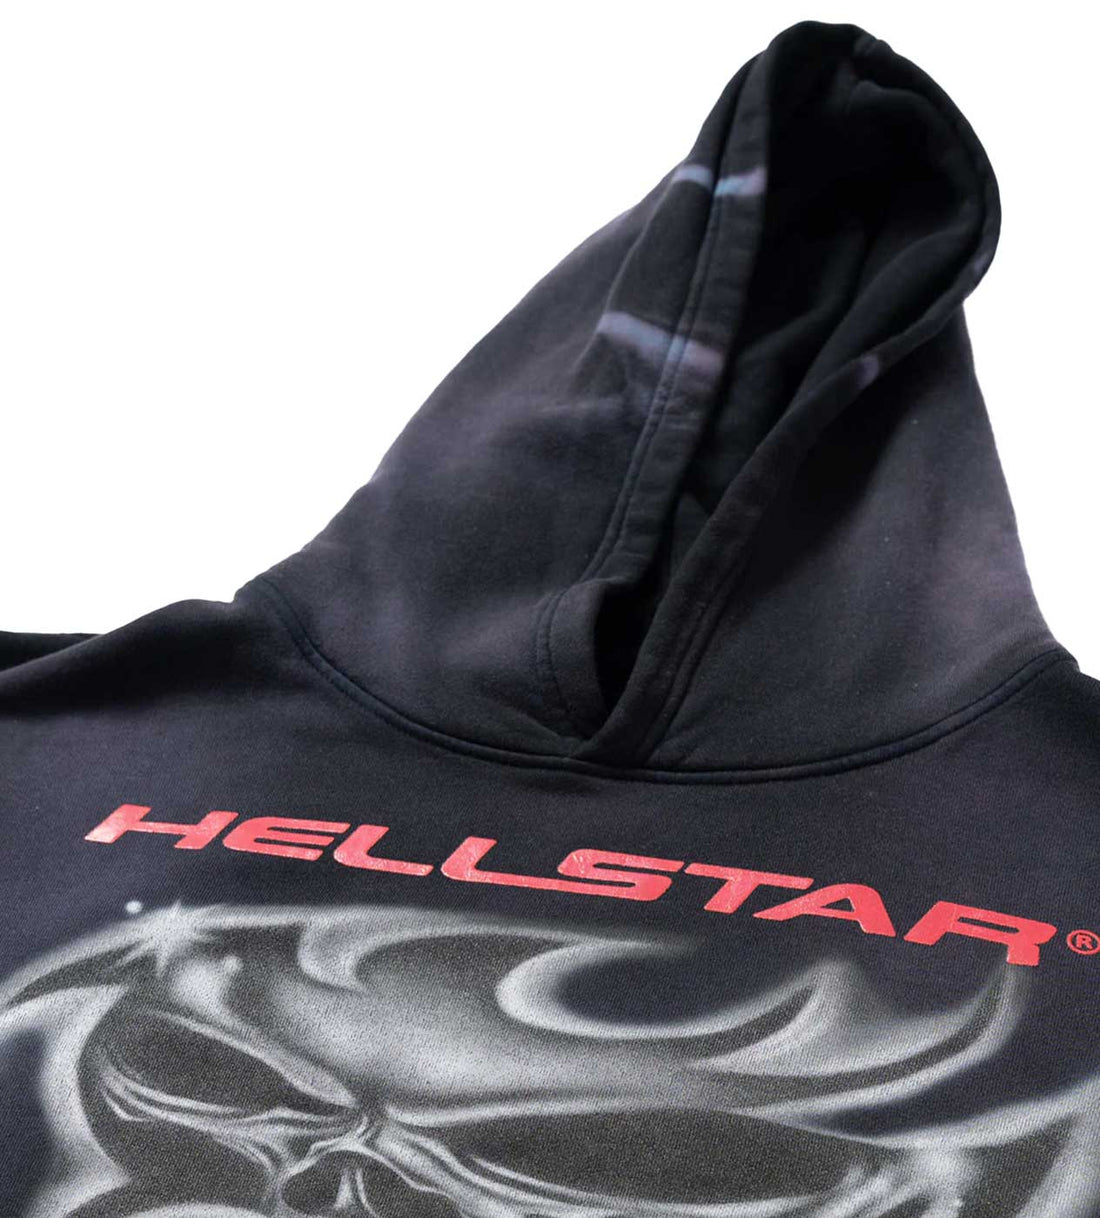 Hellstar Airbrushed Skull Hoodie Black Front Detailed View